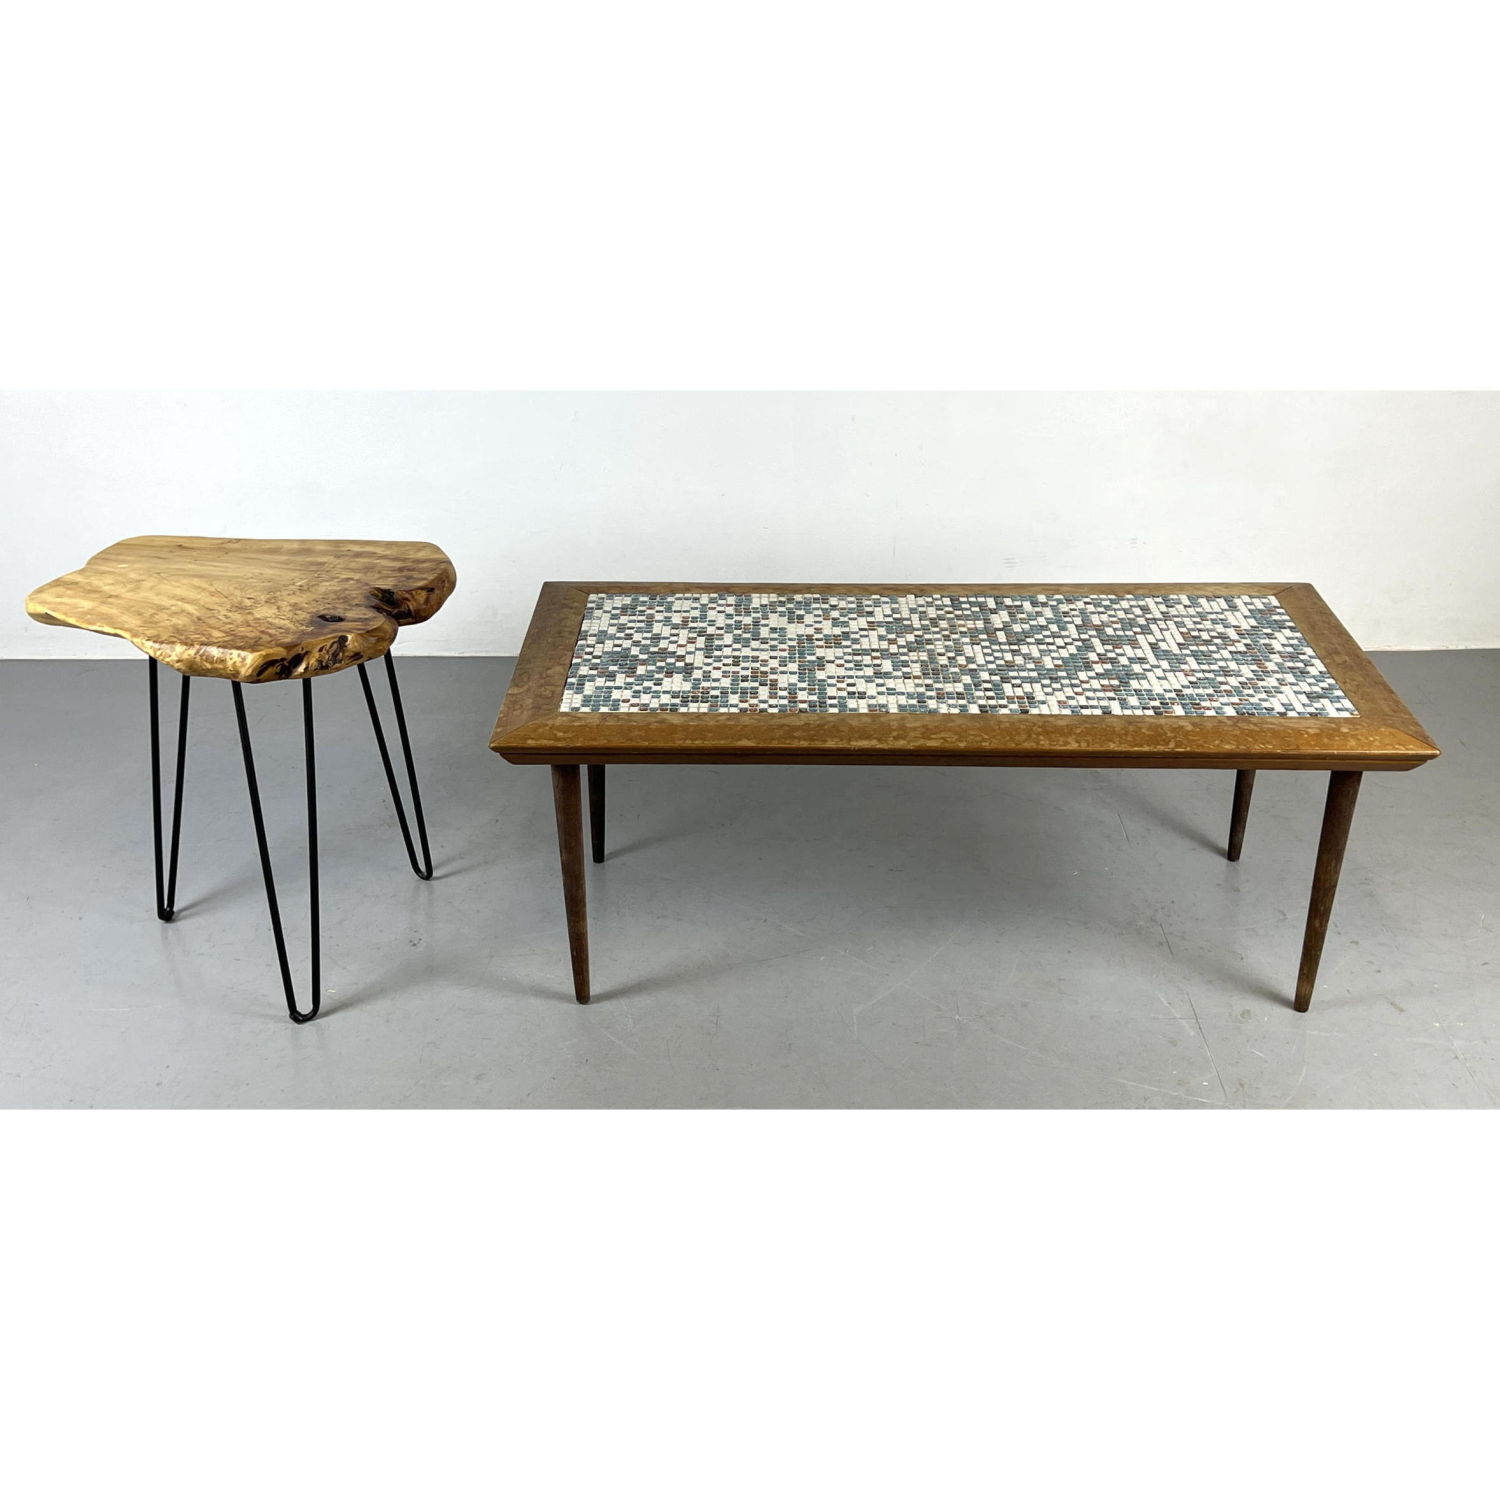 2pcs modernist Tables Tile top 2fced4